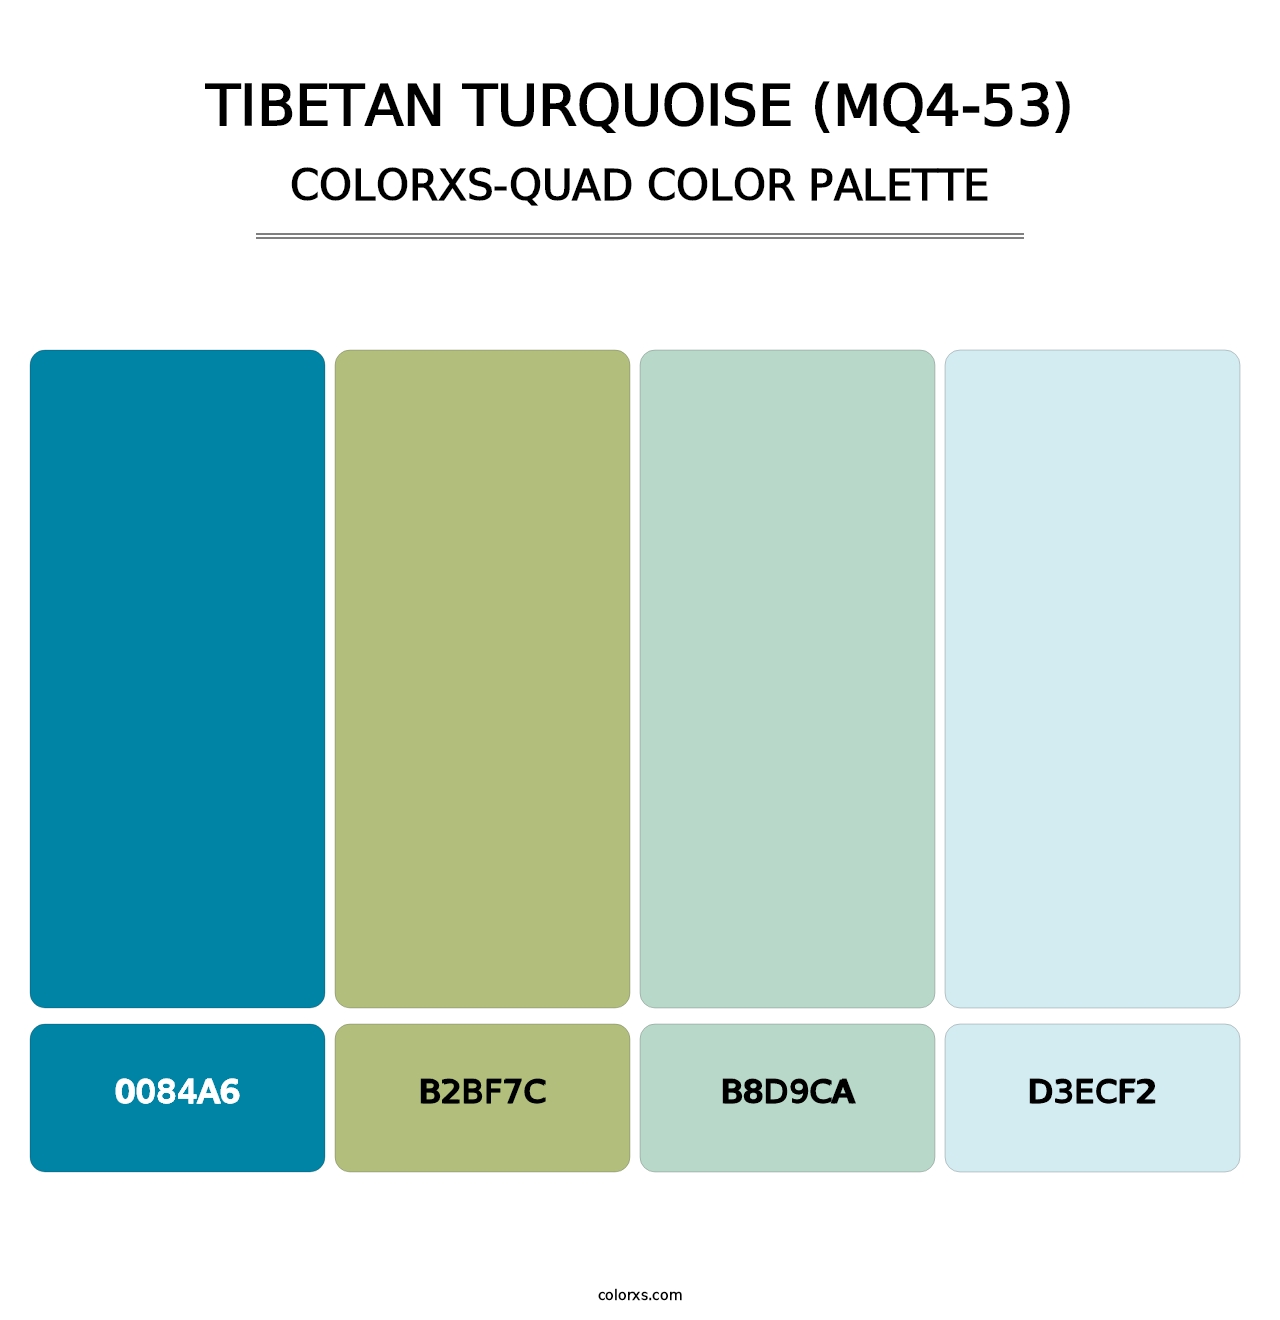 Tibetan Turquoise (MQ4-53) - Colorxs Quad Palette